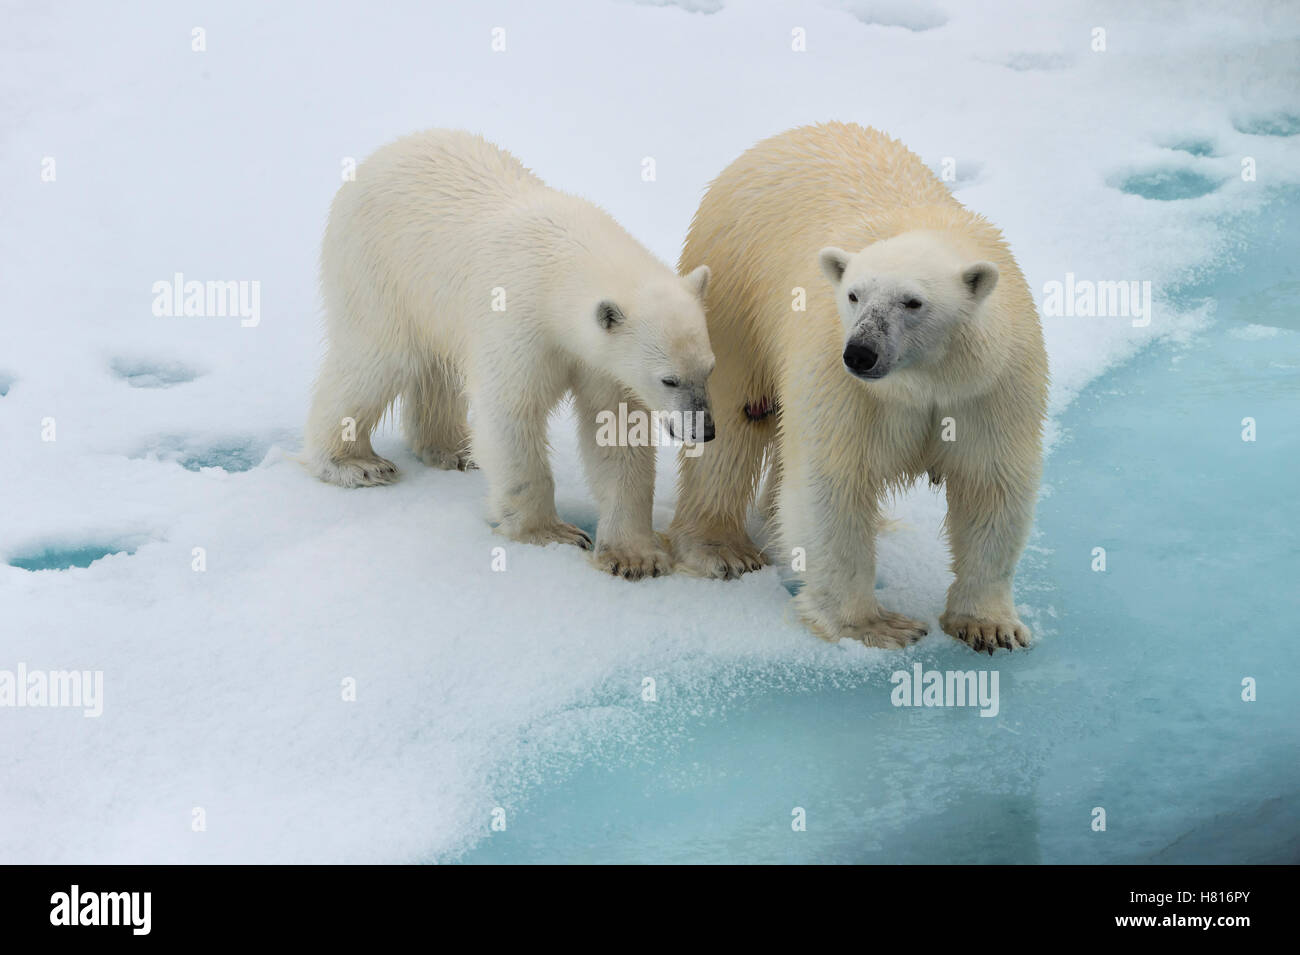 Mother polar bear (Ursus maritimus) with a cub on the edge of a melting ice floe, Spitsbergen Island, Svalbard archipelago Stock Photo